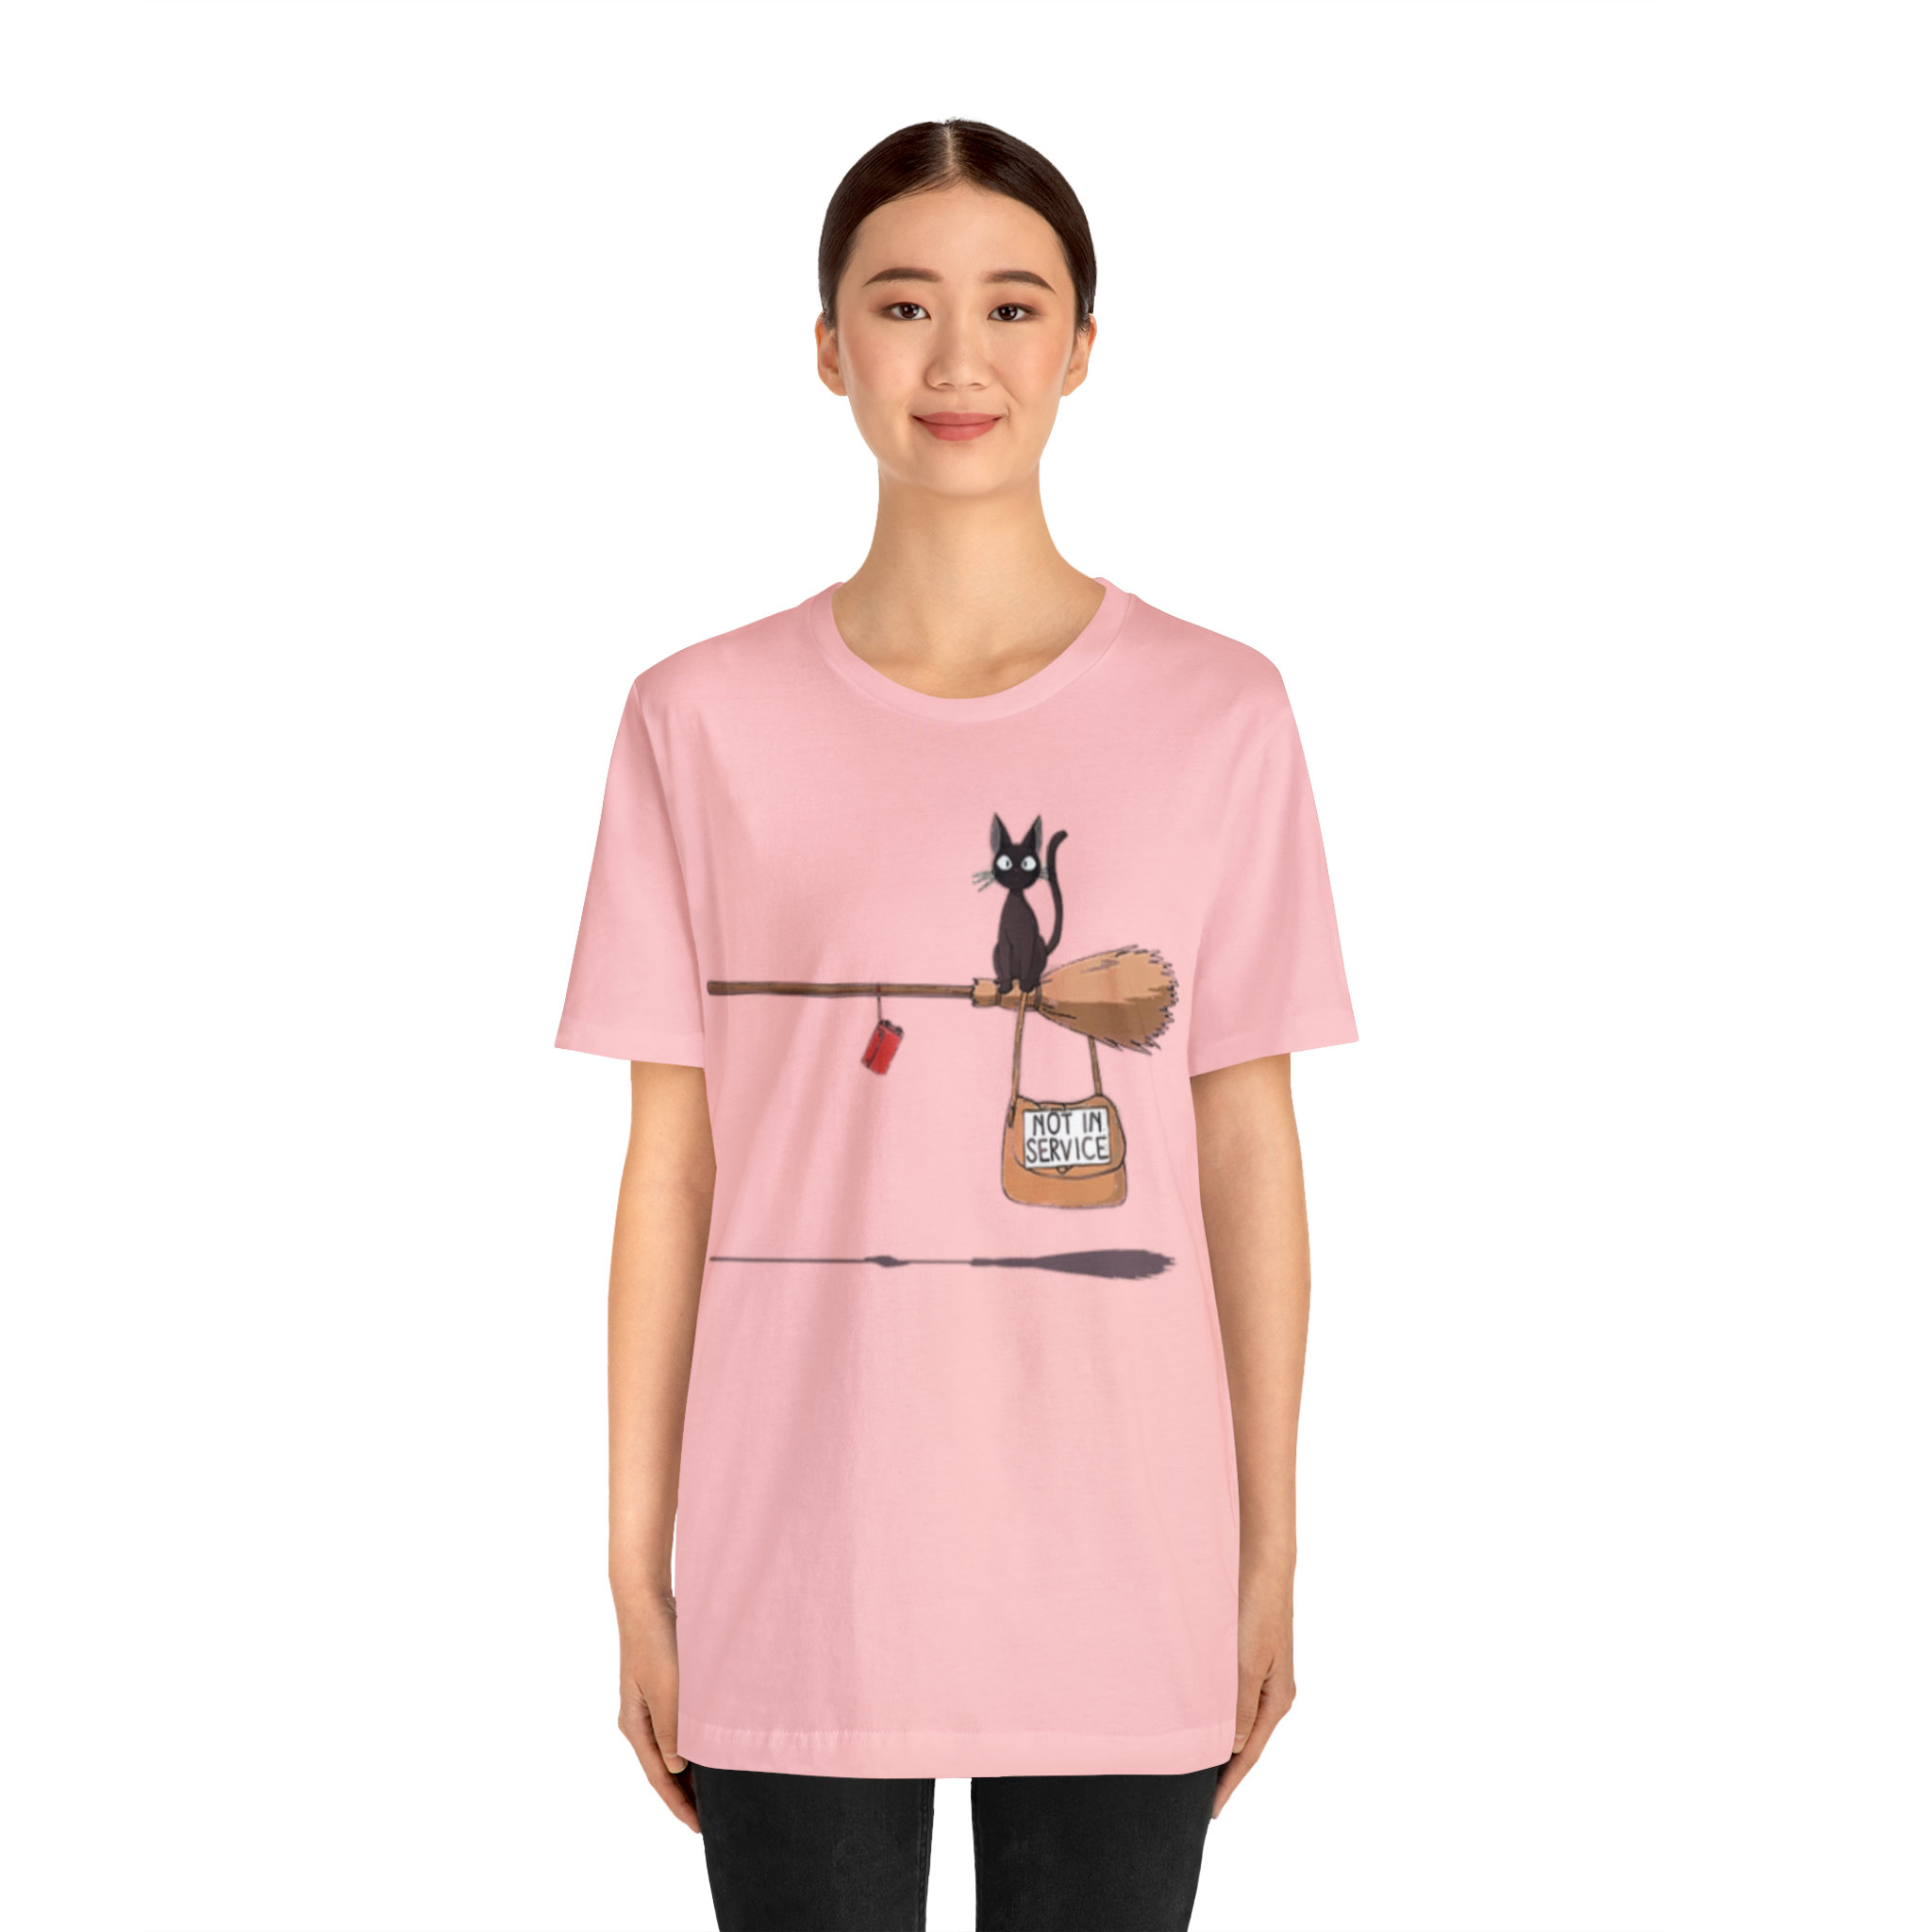 Y2K Cat Shirt Plus Size Graphic Top Kawaii Aesthetic Unisex Crew Neck Tee